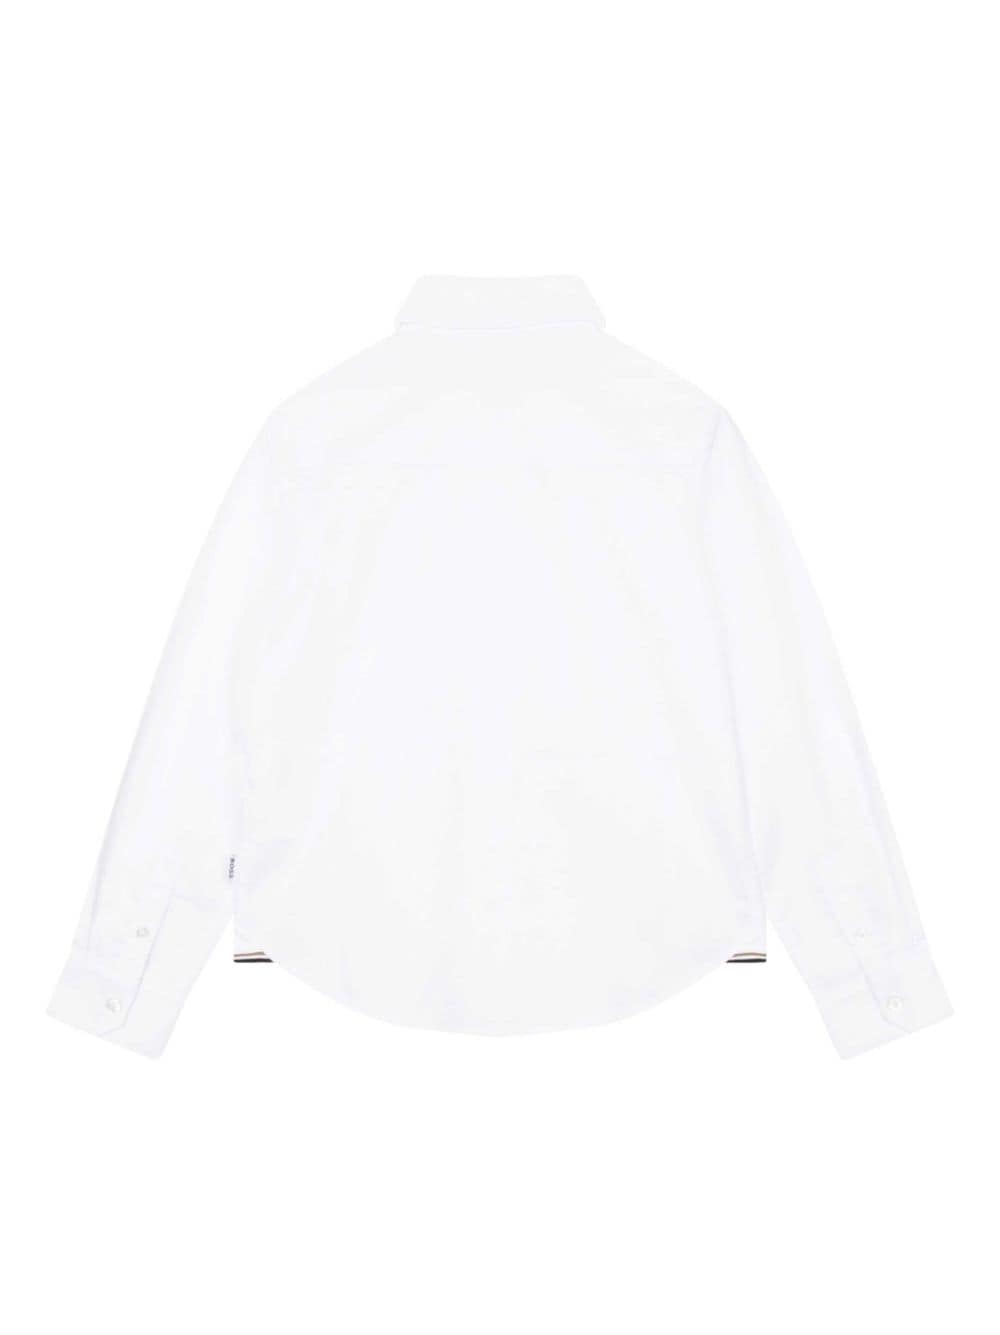 White cotton poplin boy HUGO BOSS shirt